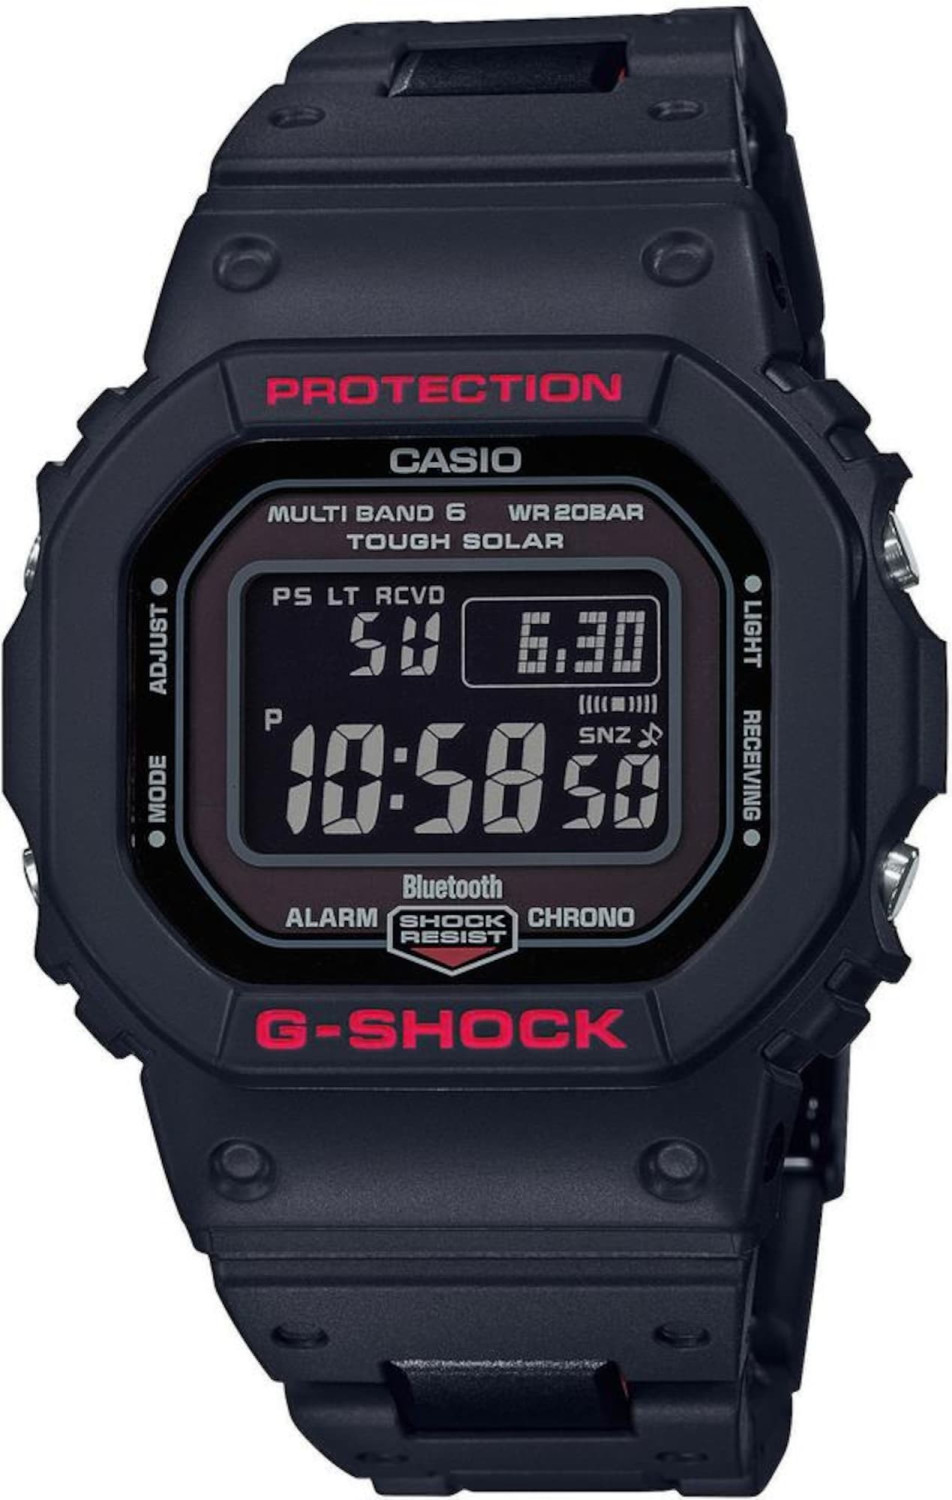 Buy Casio G-Shock GW-B5600HR-1ER from £306.18 (Today) – Best Deals on